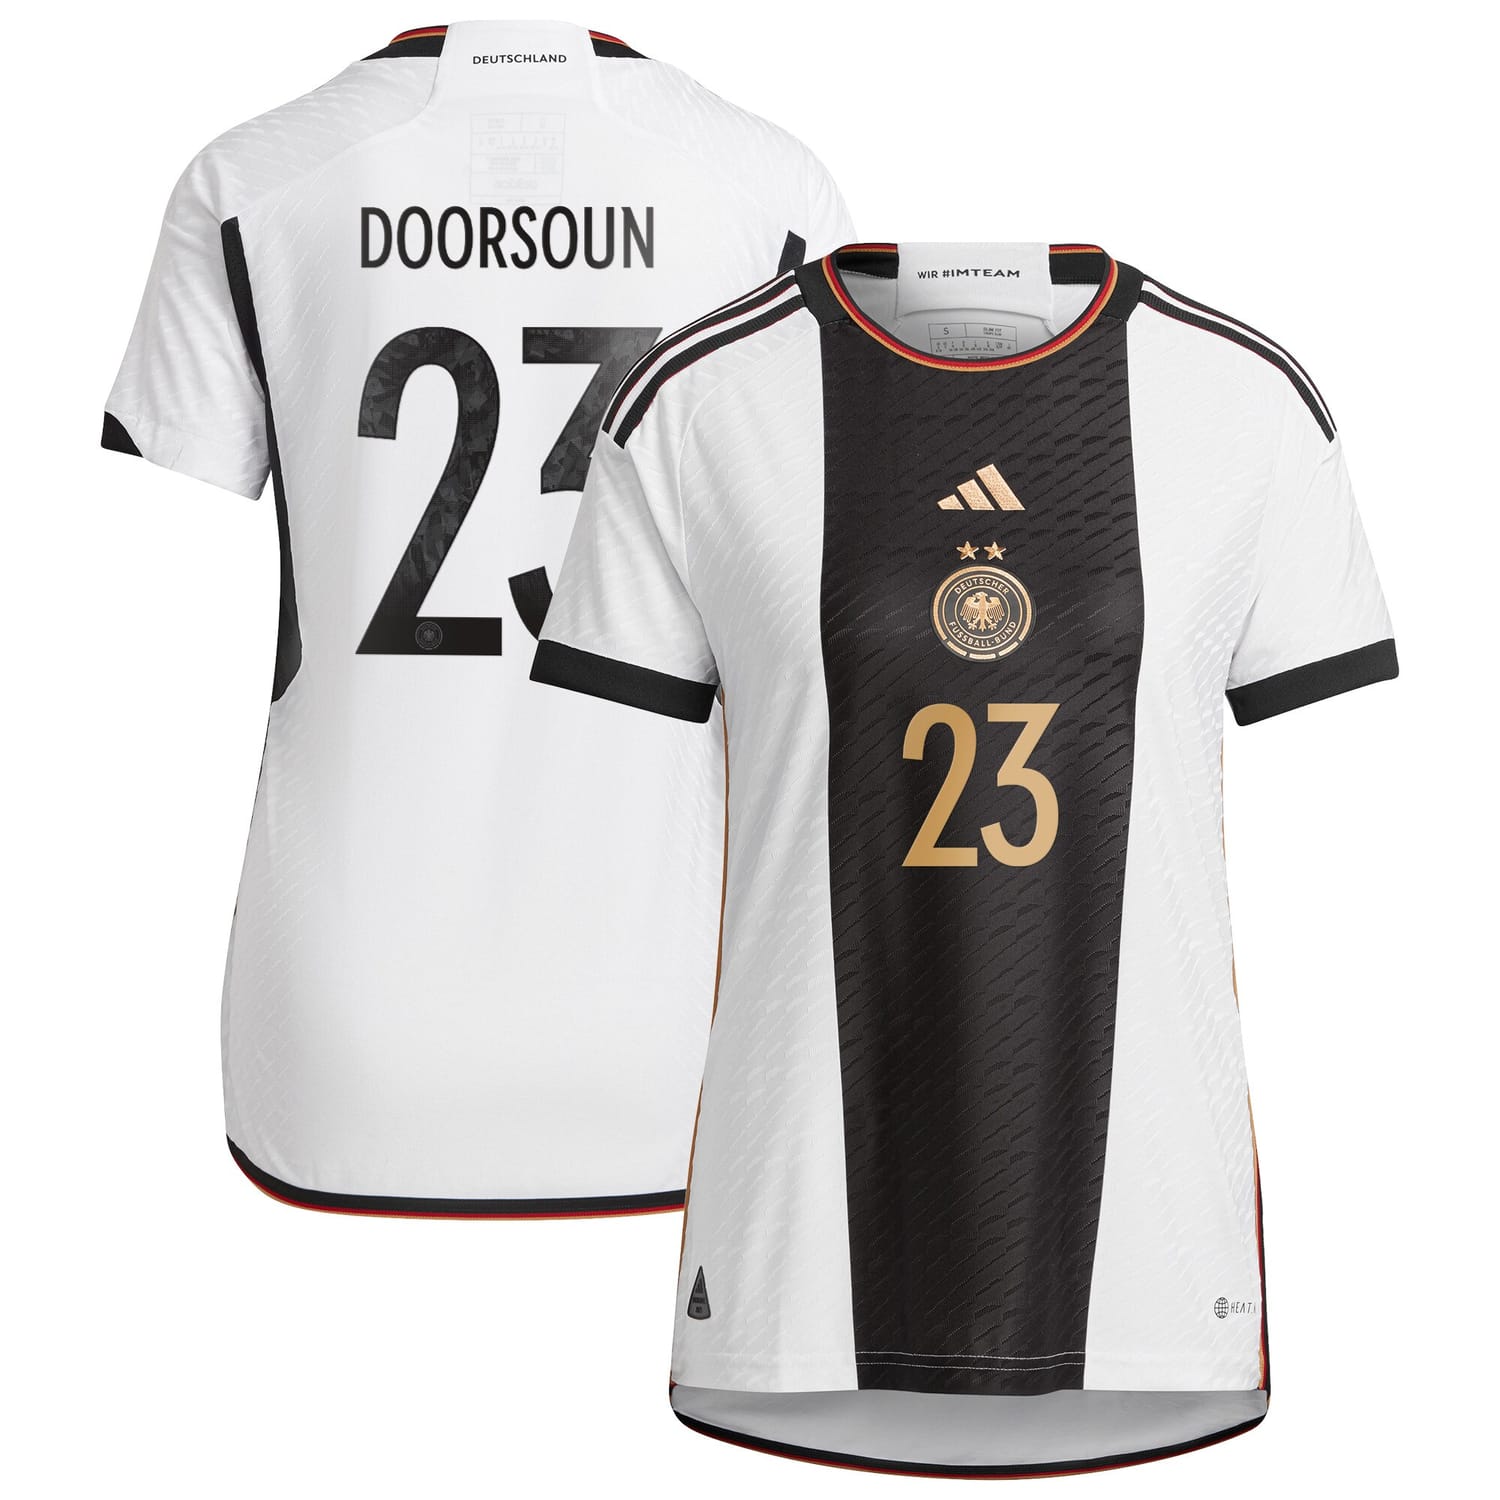 Germany National Team Home Authentic Jersey Shirt player Sara Doorsoun 23 printing for Women